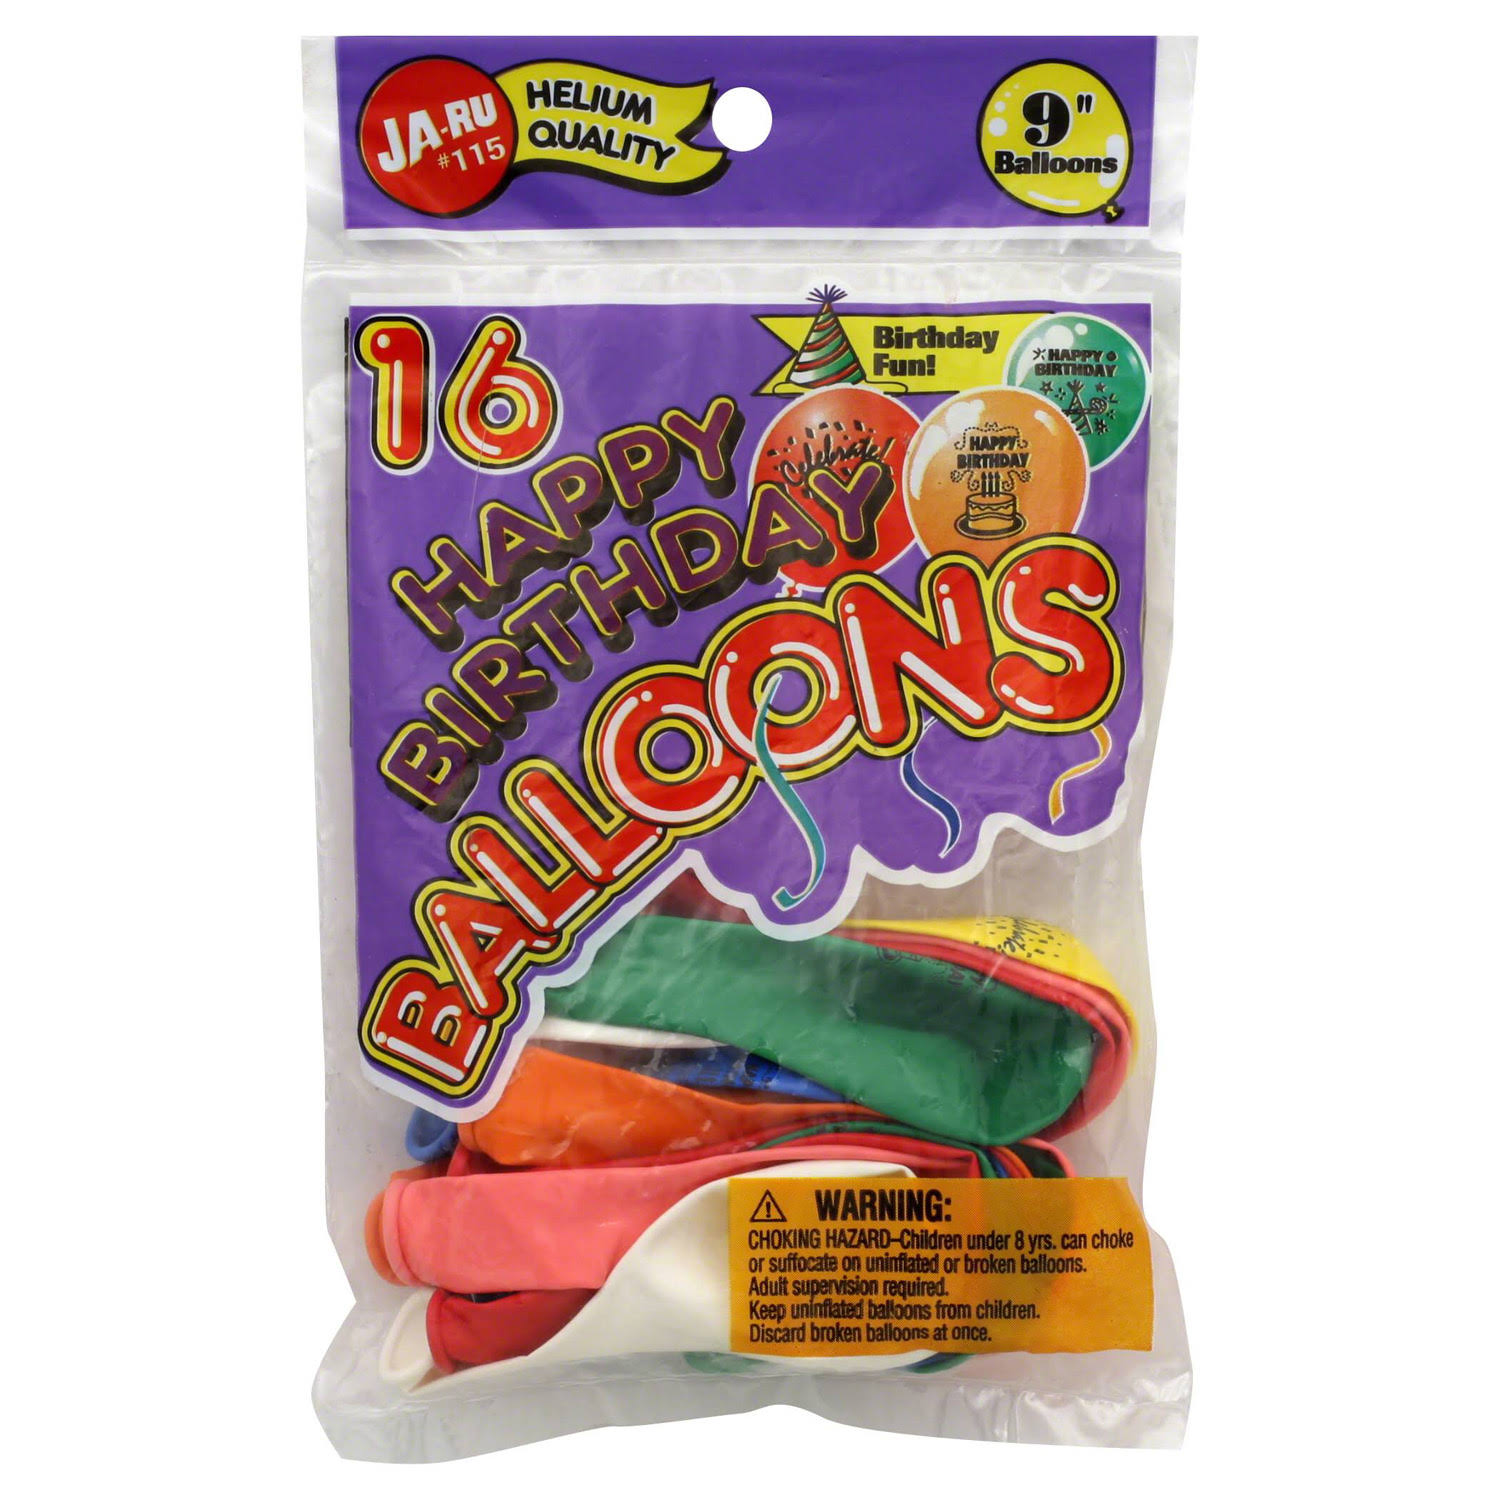 JA-RU - Balloons, Happy Birthday, 9 Inch - 16 Balloons